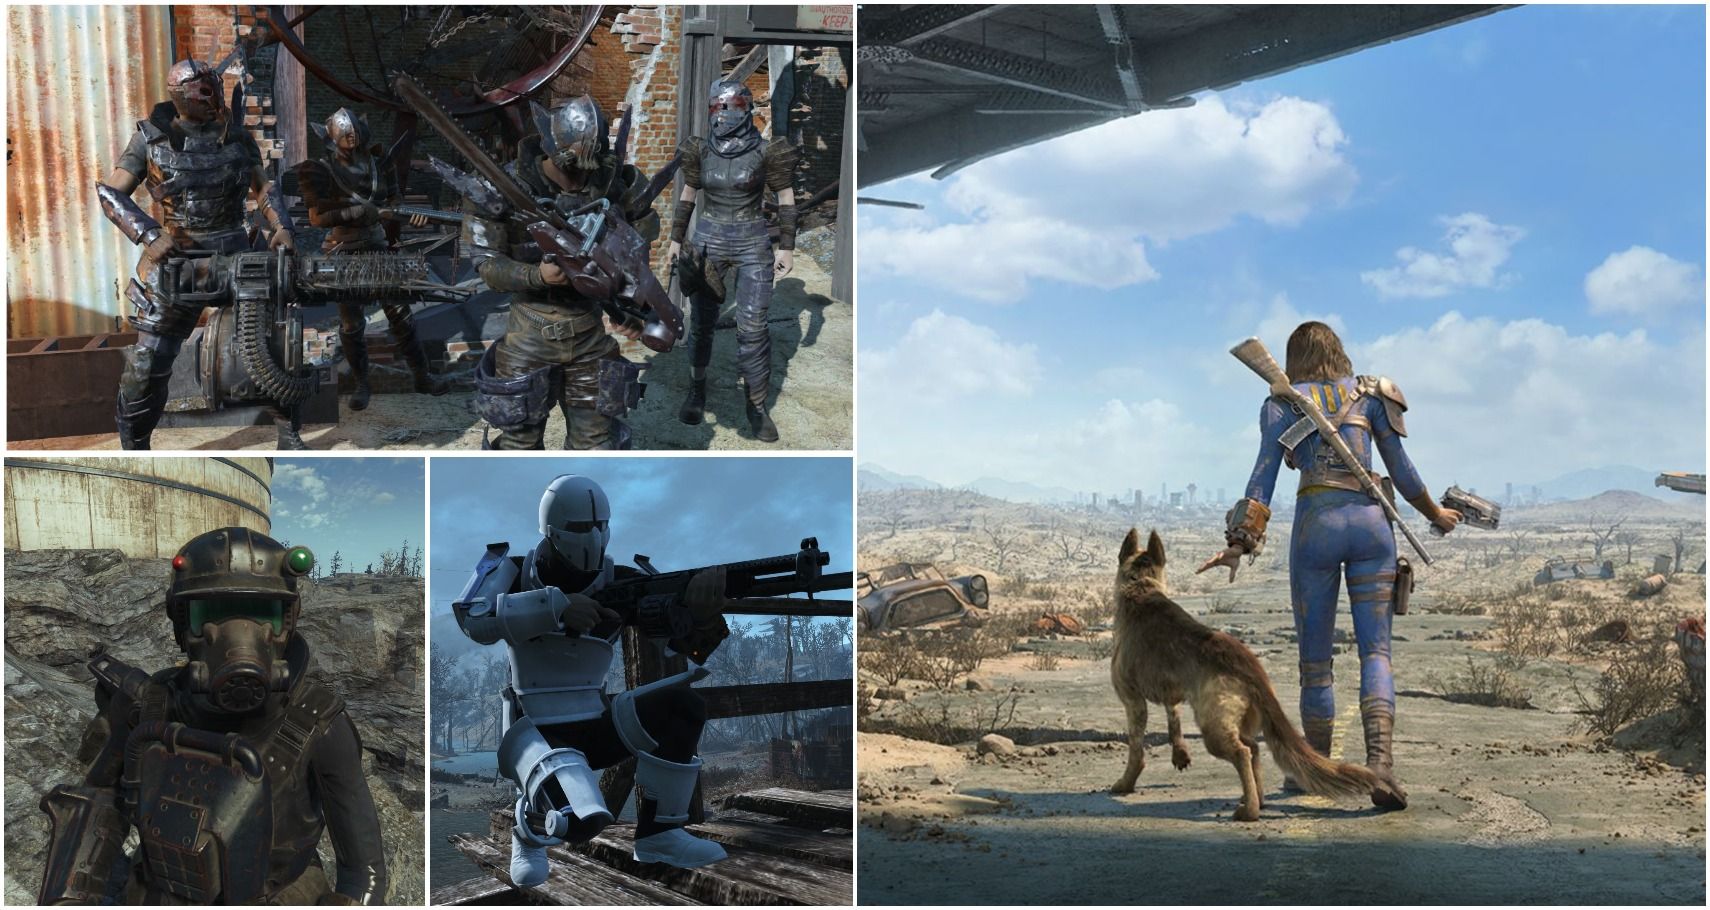 I migliori set di armature in Fallout 4